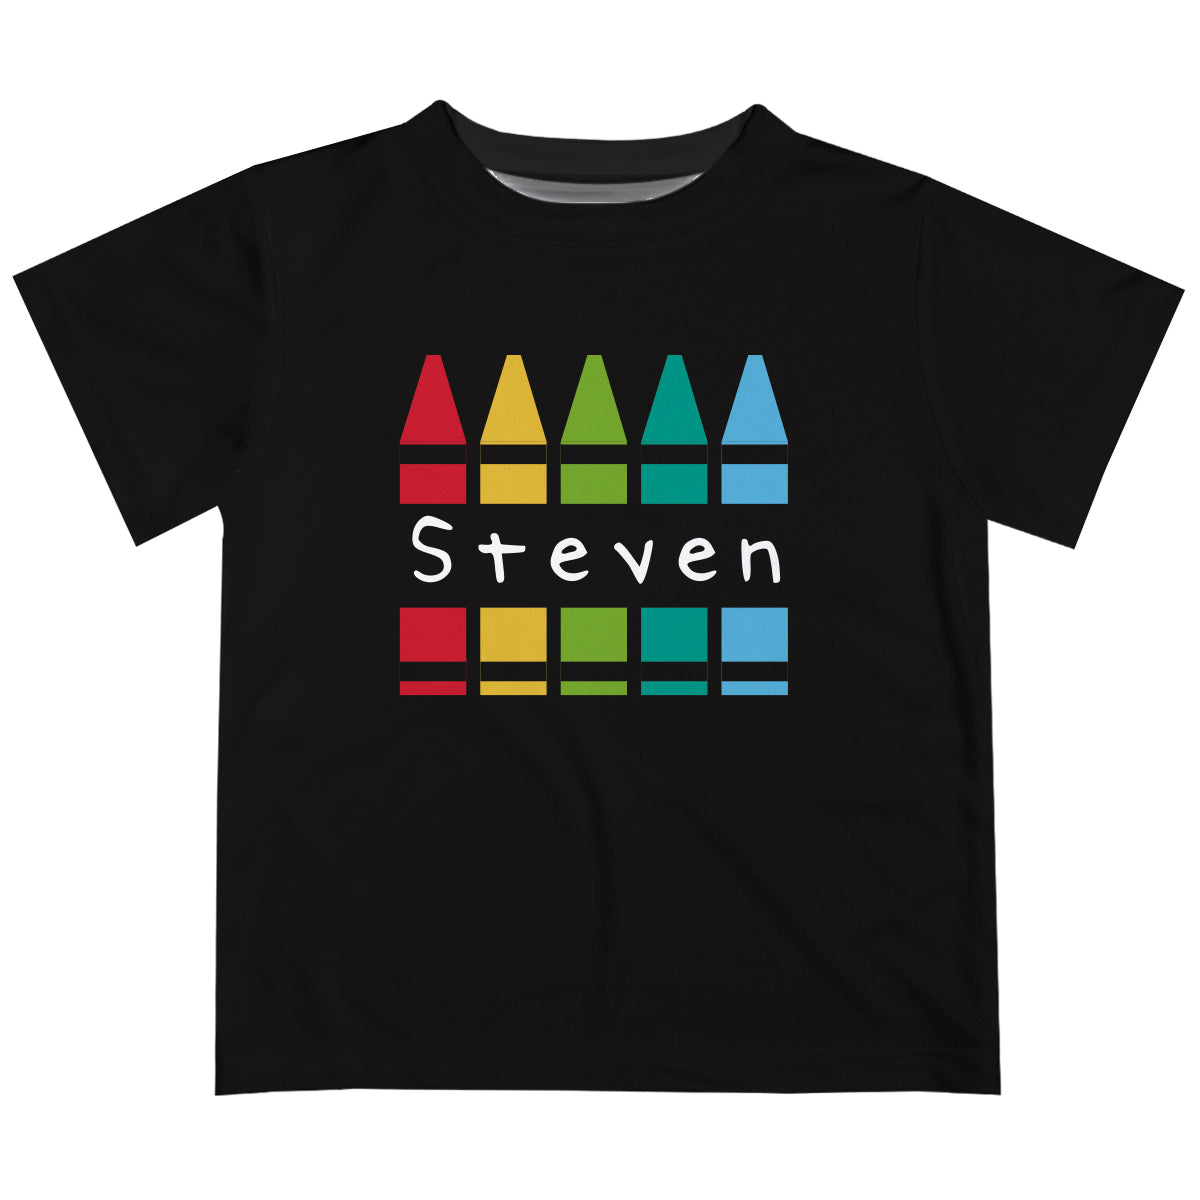 Crayons Personalized Name Black Short Sleeve Tee Shirt